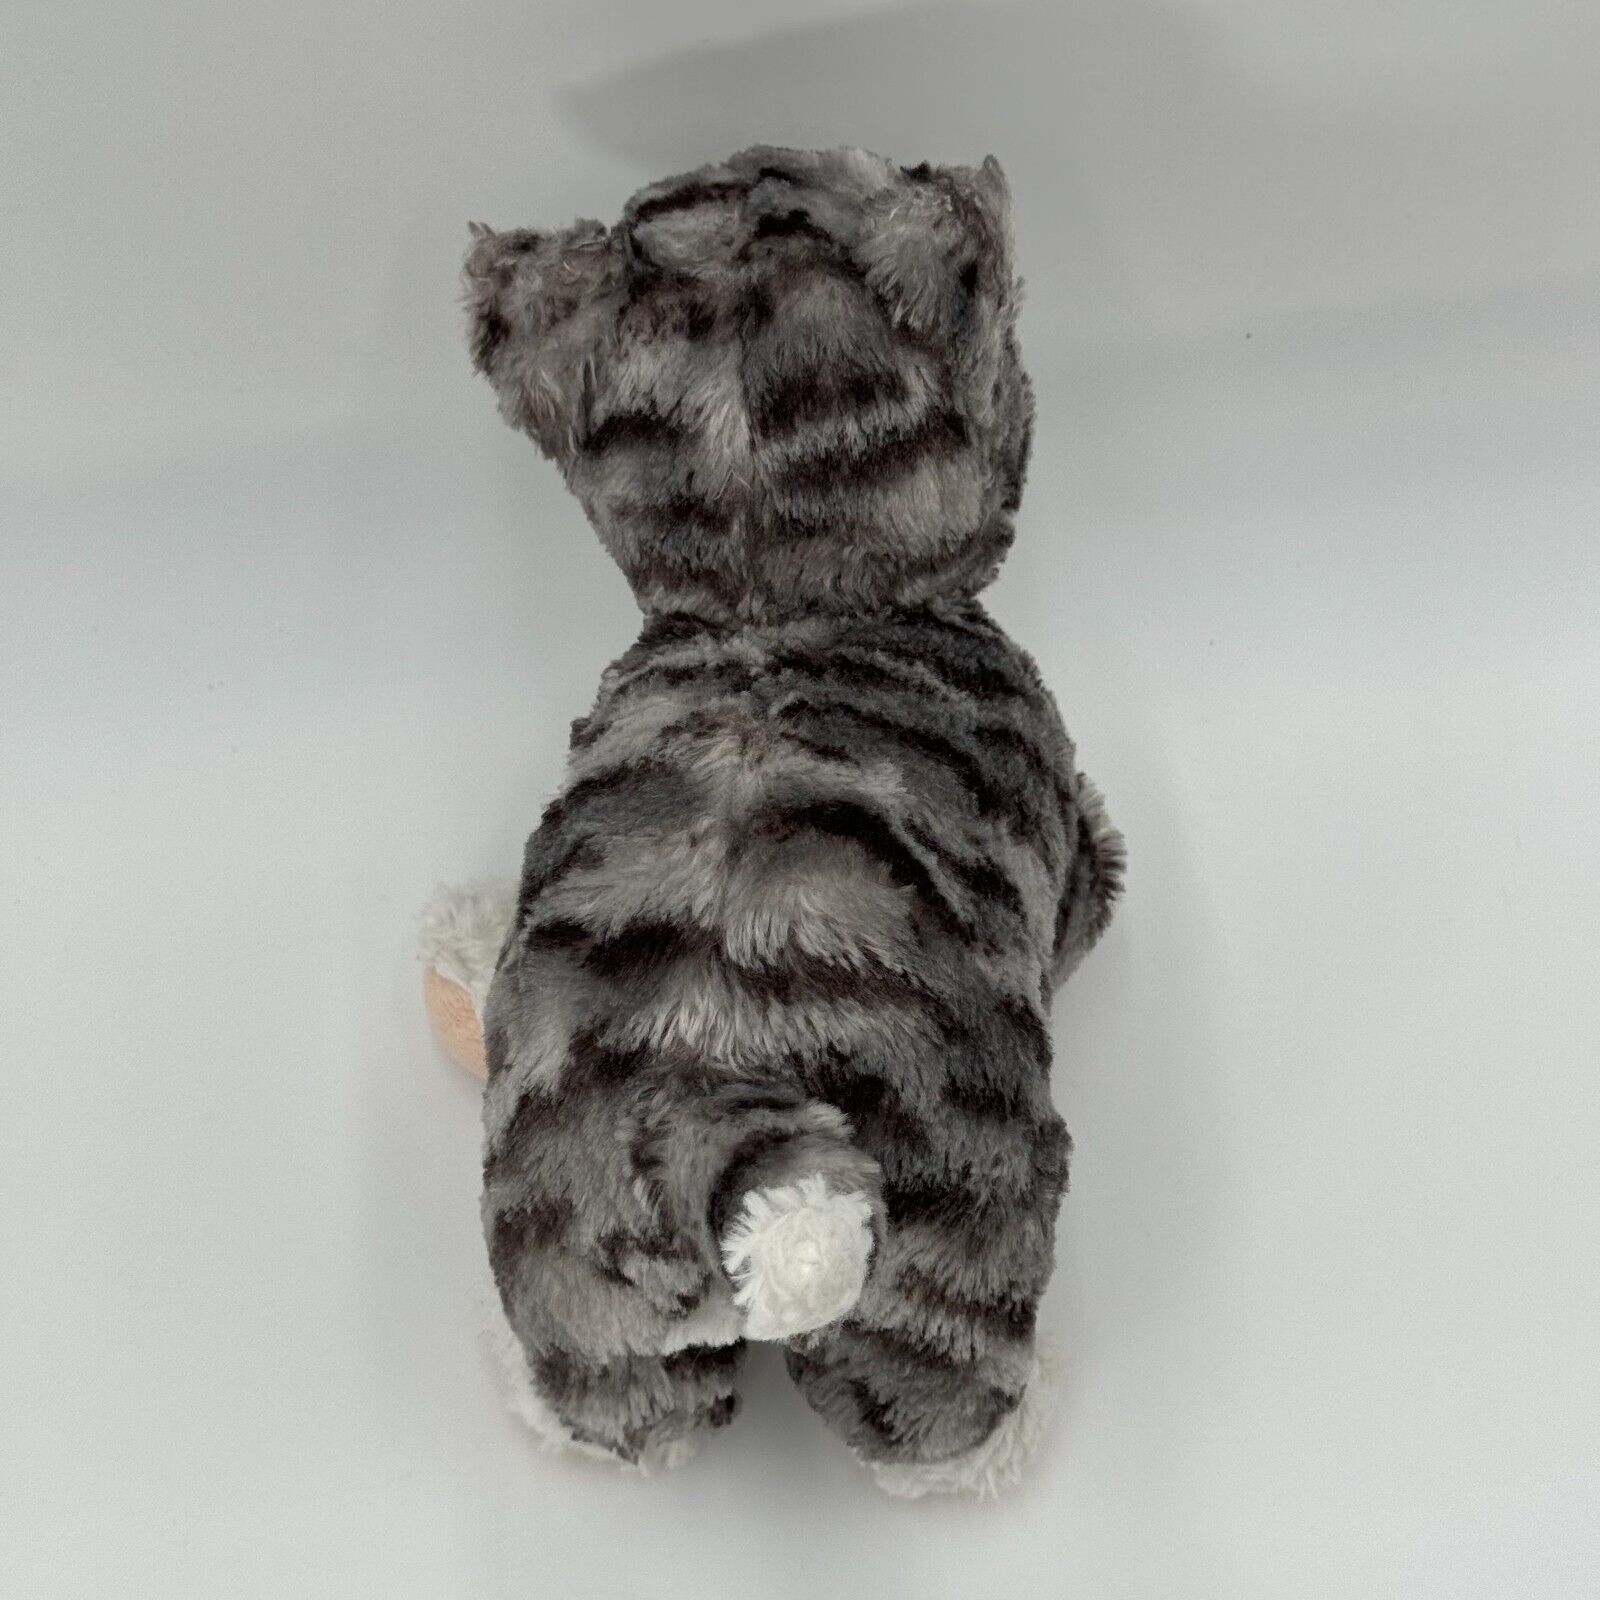 IKEA Lilleplutt Kitty Cat 8" Plush Stuffed Animal Gray Black White Tabby